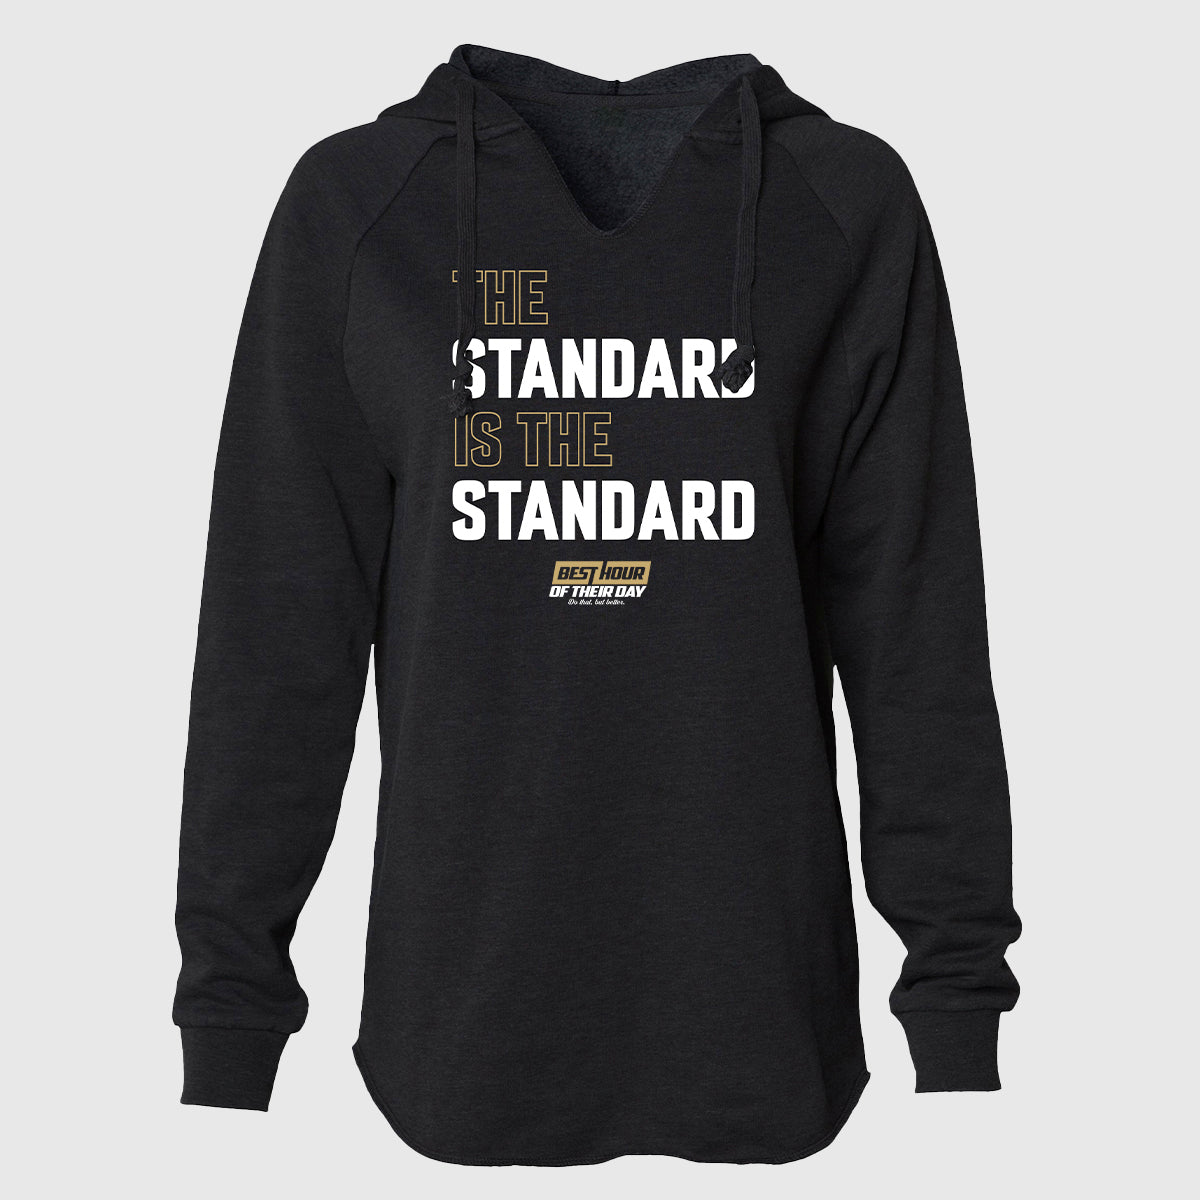 The Standard Is The Standard Women's Hoodie